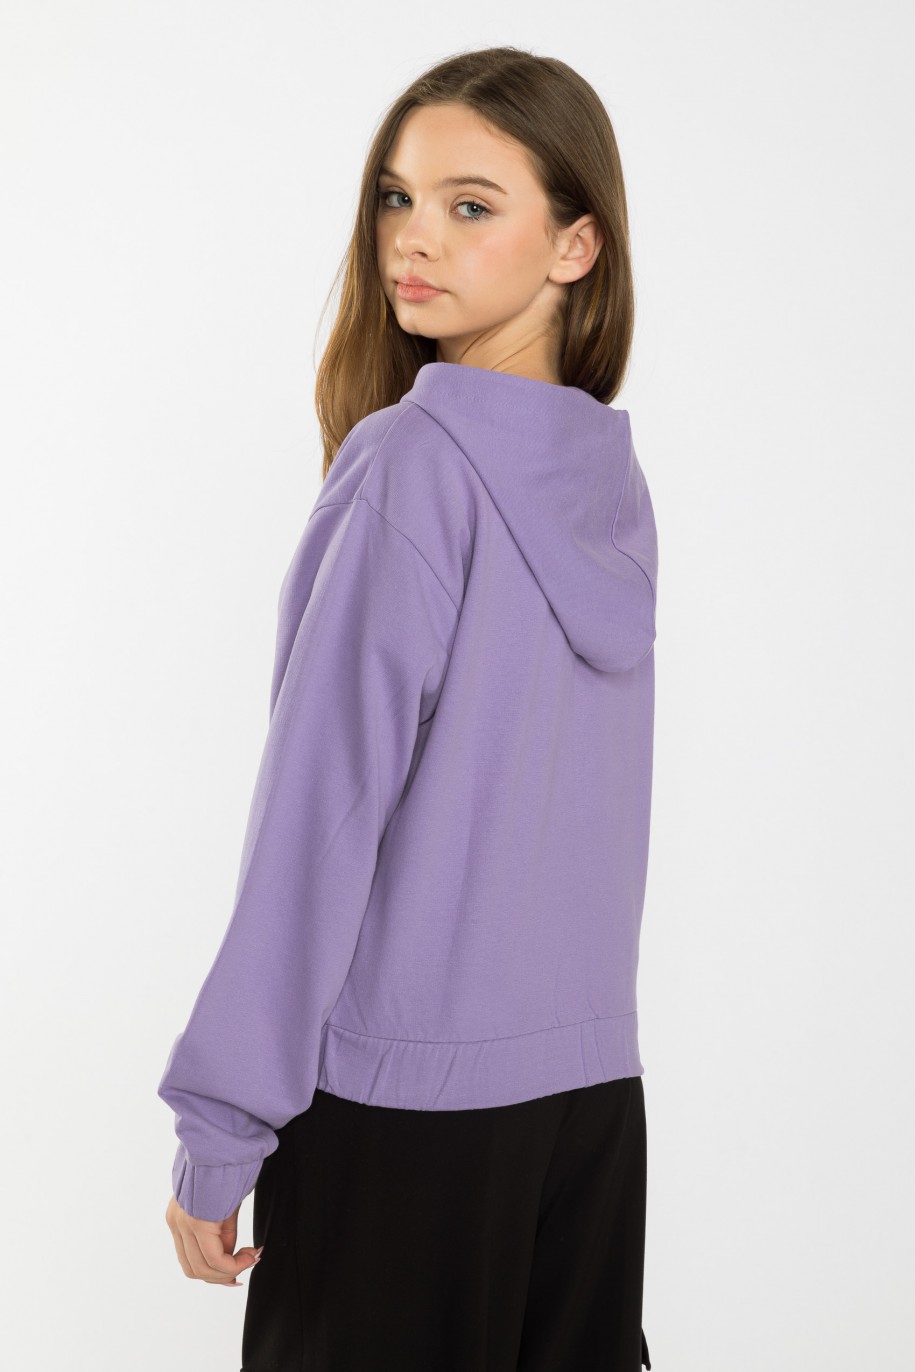 Fioletowa rozpinana bluza dresowa z kapturem - 40333